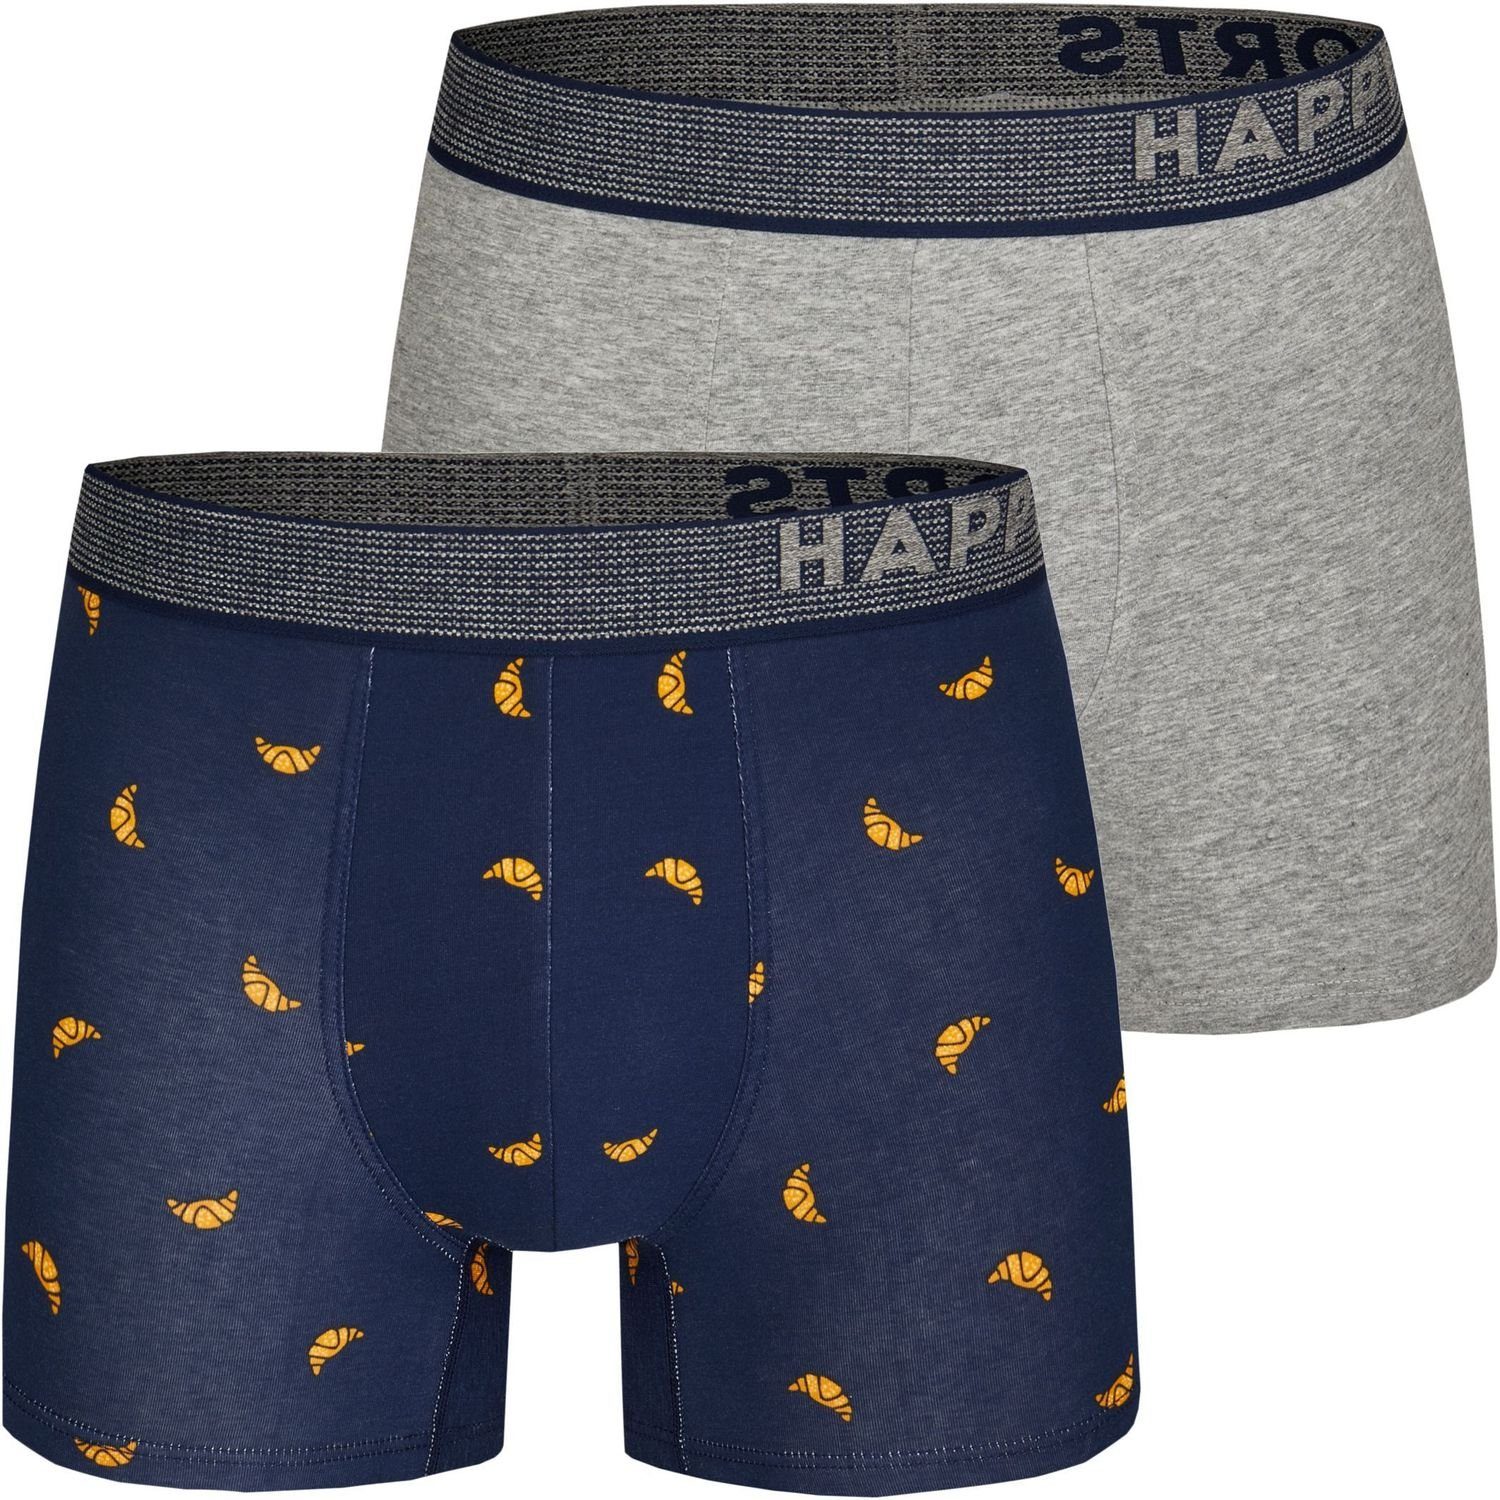 HAPPY SHORTS Trunk 2 Happy Shorts Pants Jersey Trunk Herren Boxershorts marine grau Croissant (1-St) Croissants